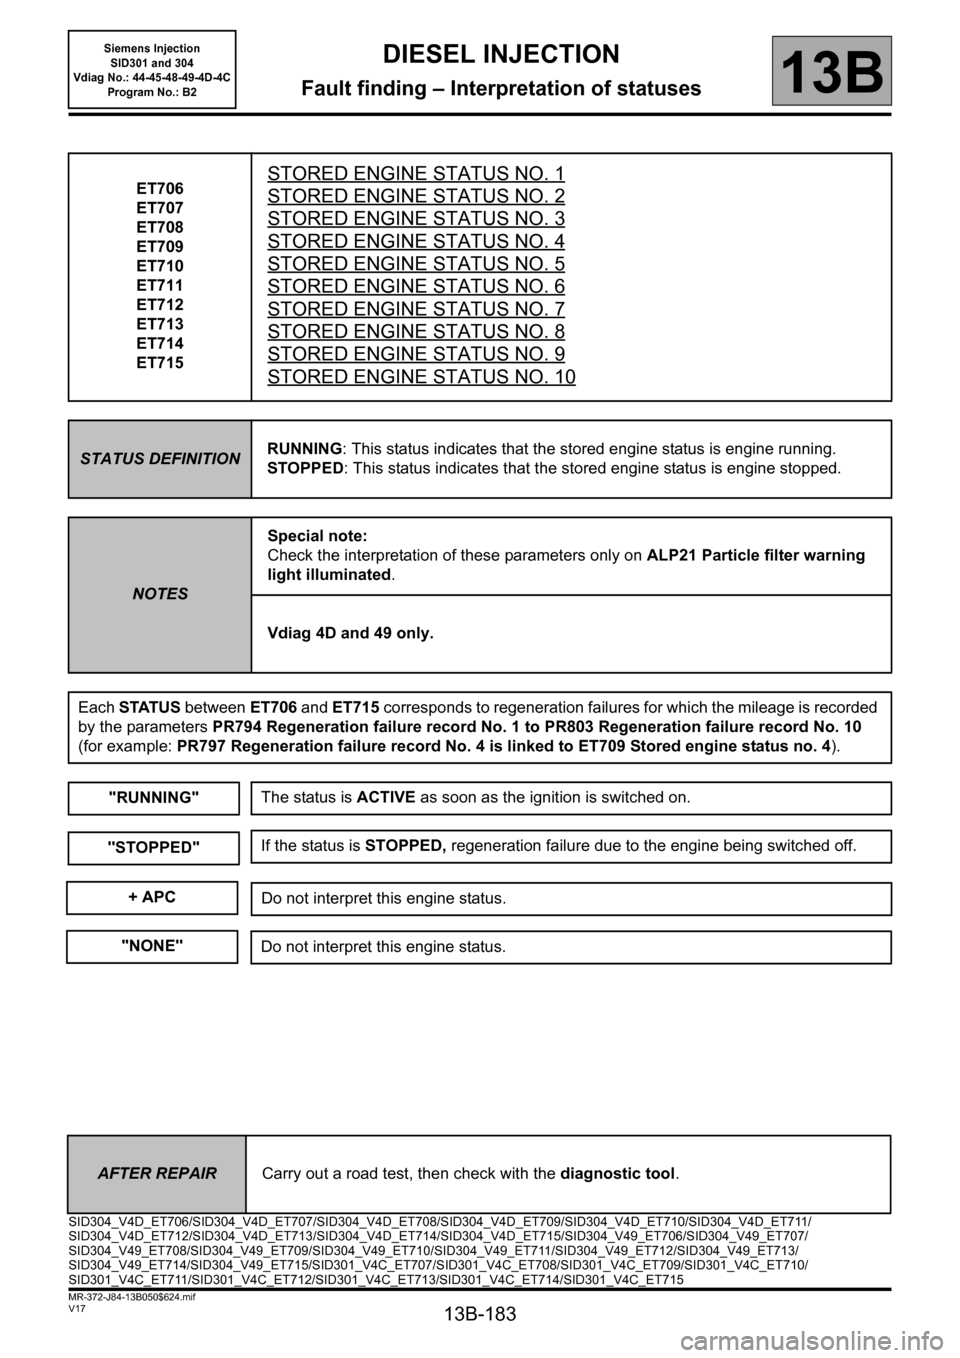 RENAULT SCENIC 2011 J95 / 3.G Engine And Peripherals Siemens Injection Workshop Manual 13B-183
MR-372-J84-13B050$624.mif
V17
Siemens Injection 
SID301 and 304 
Vdiag No.: 44-45-48-49-4D-4C 
Program No.: B2DIESEL INJECTION
Fault finding – Interpretation of statuses13B
ET706
ET707
ET708